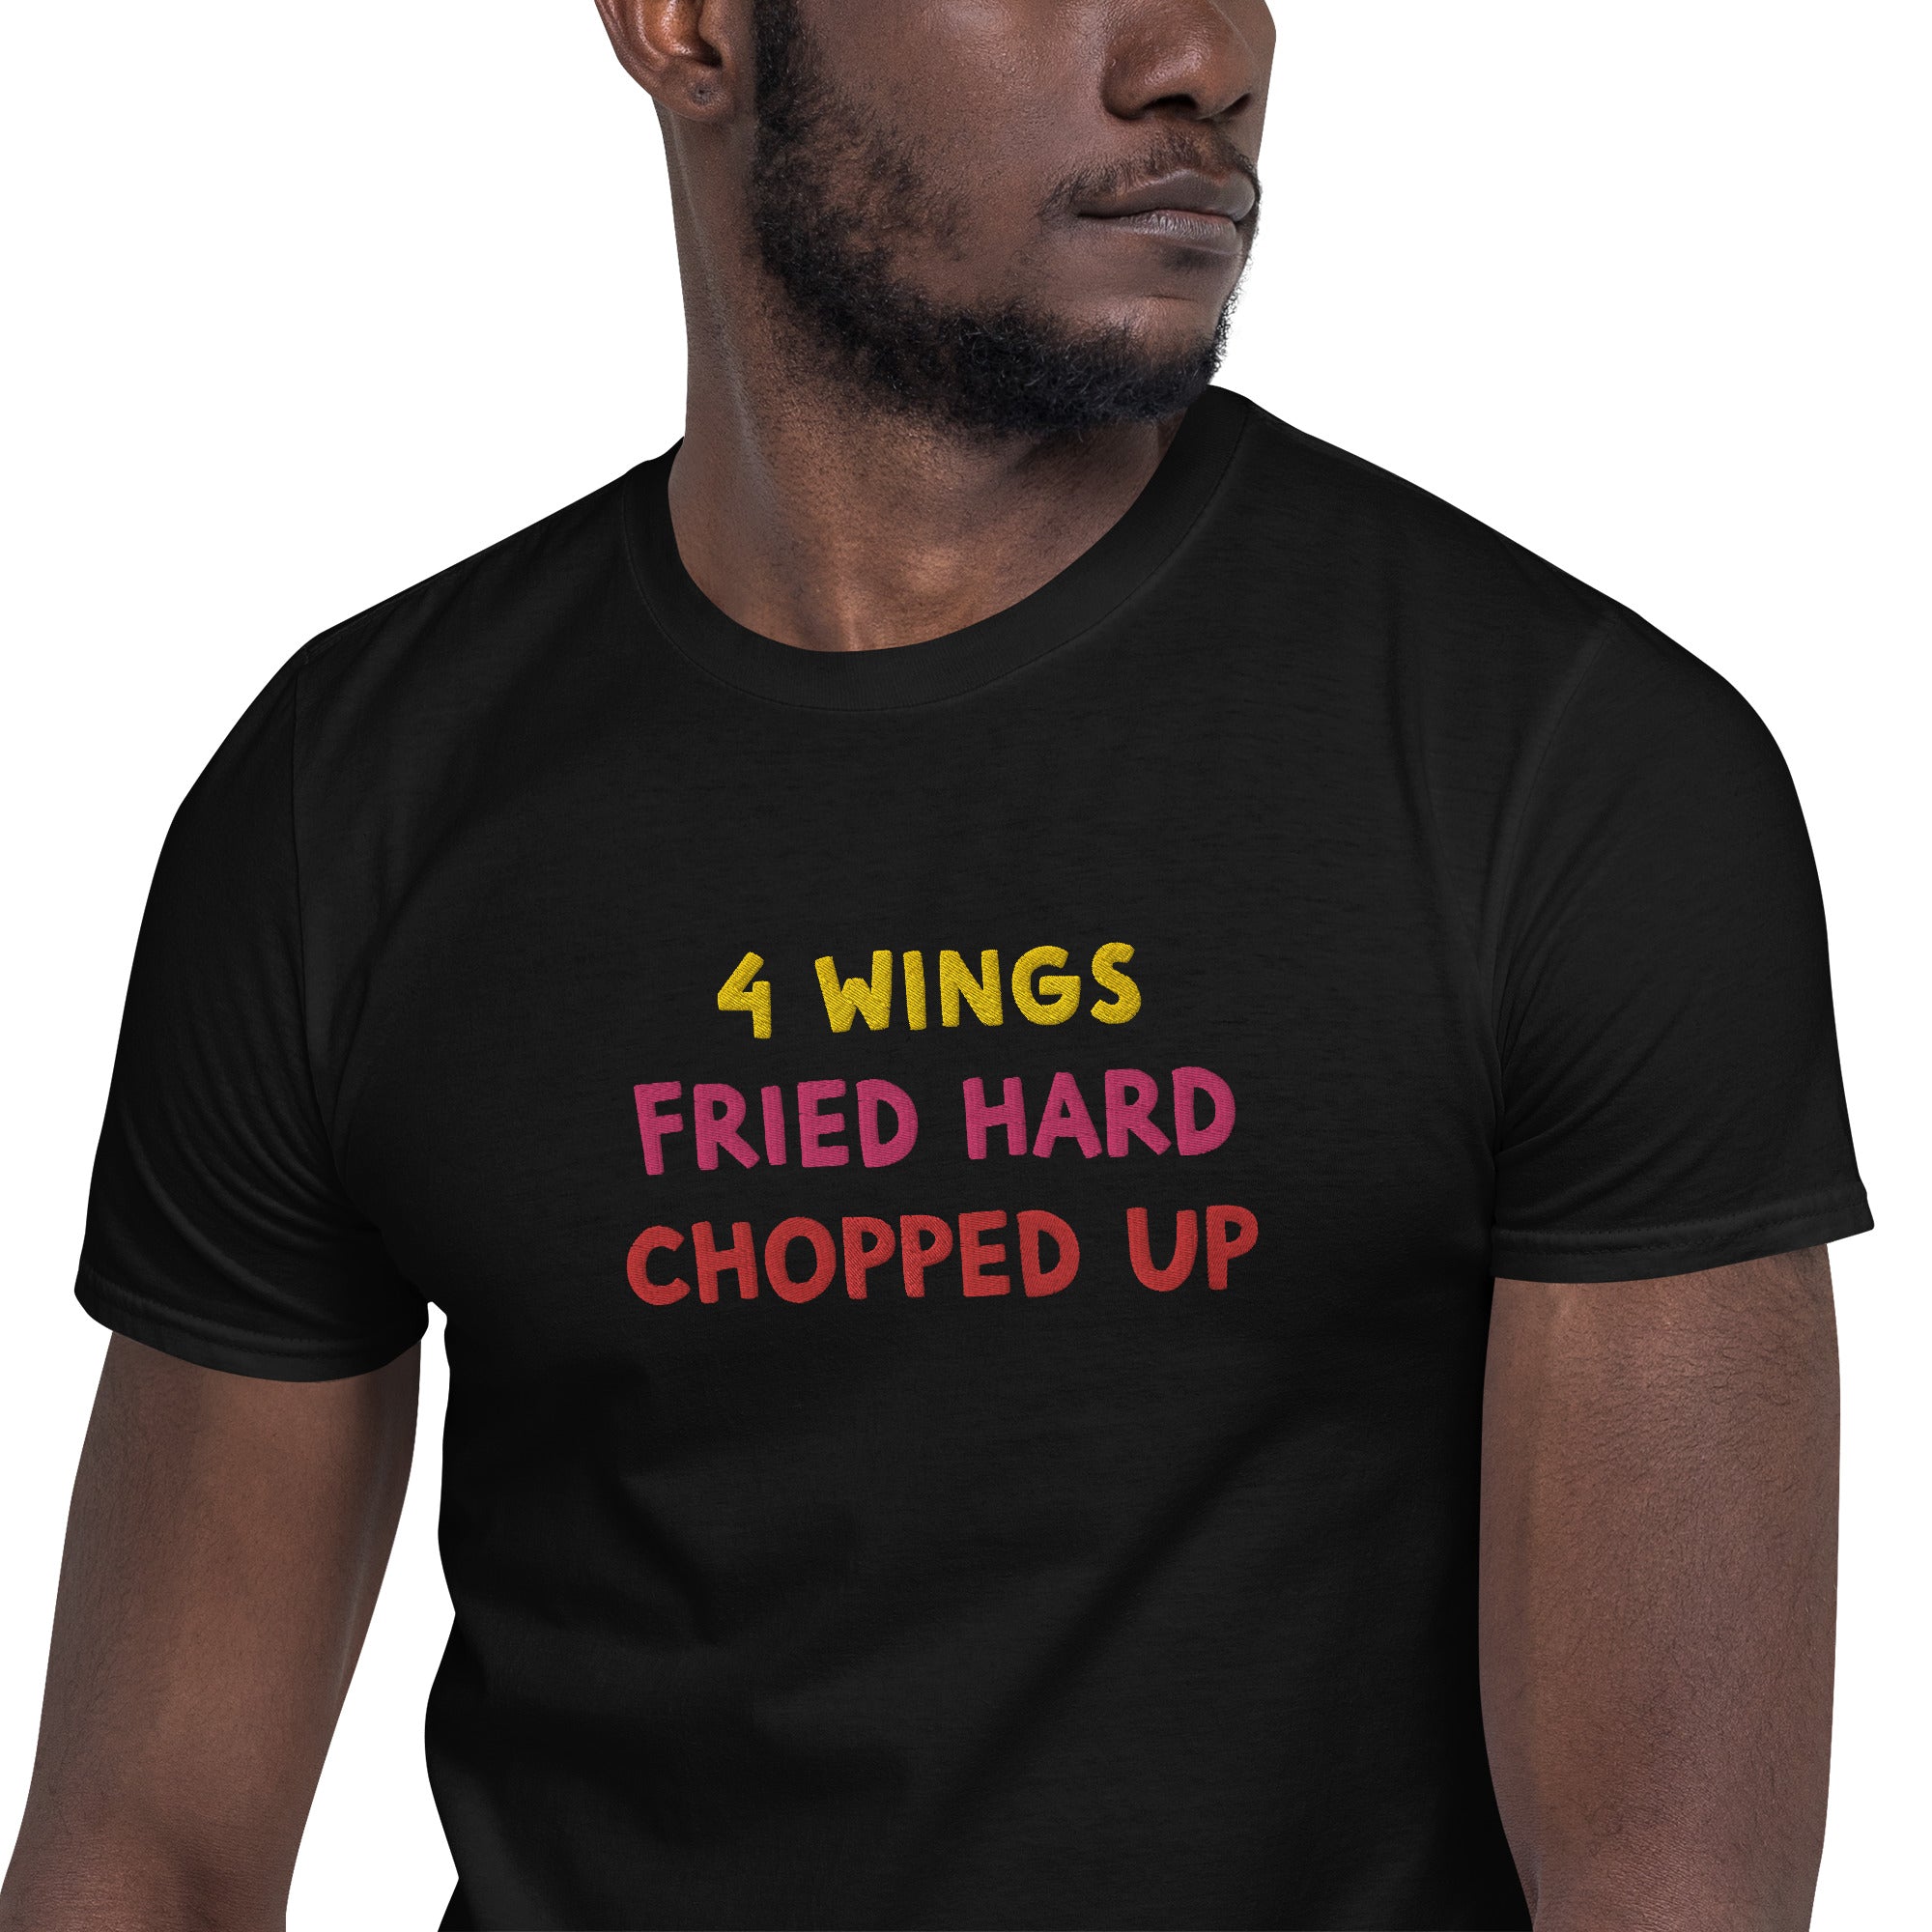 Unisex "4 Wings" Stitched Basic Soft-Style T-Shirt - THE CORNBREAD KITCHEN SHOP